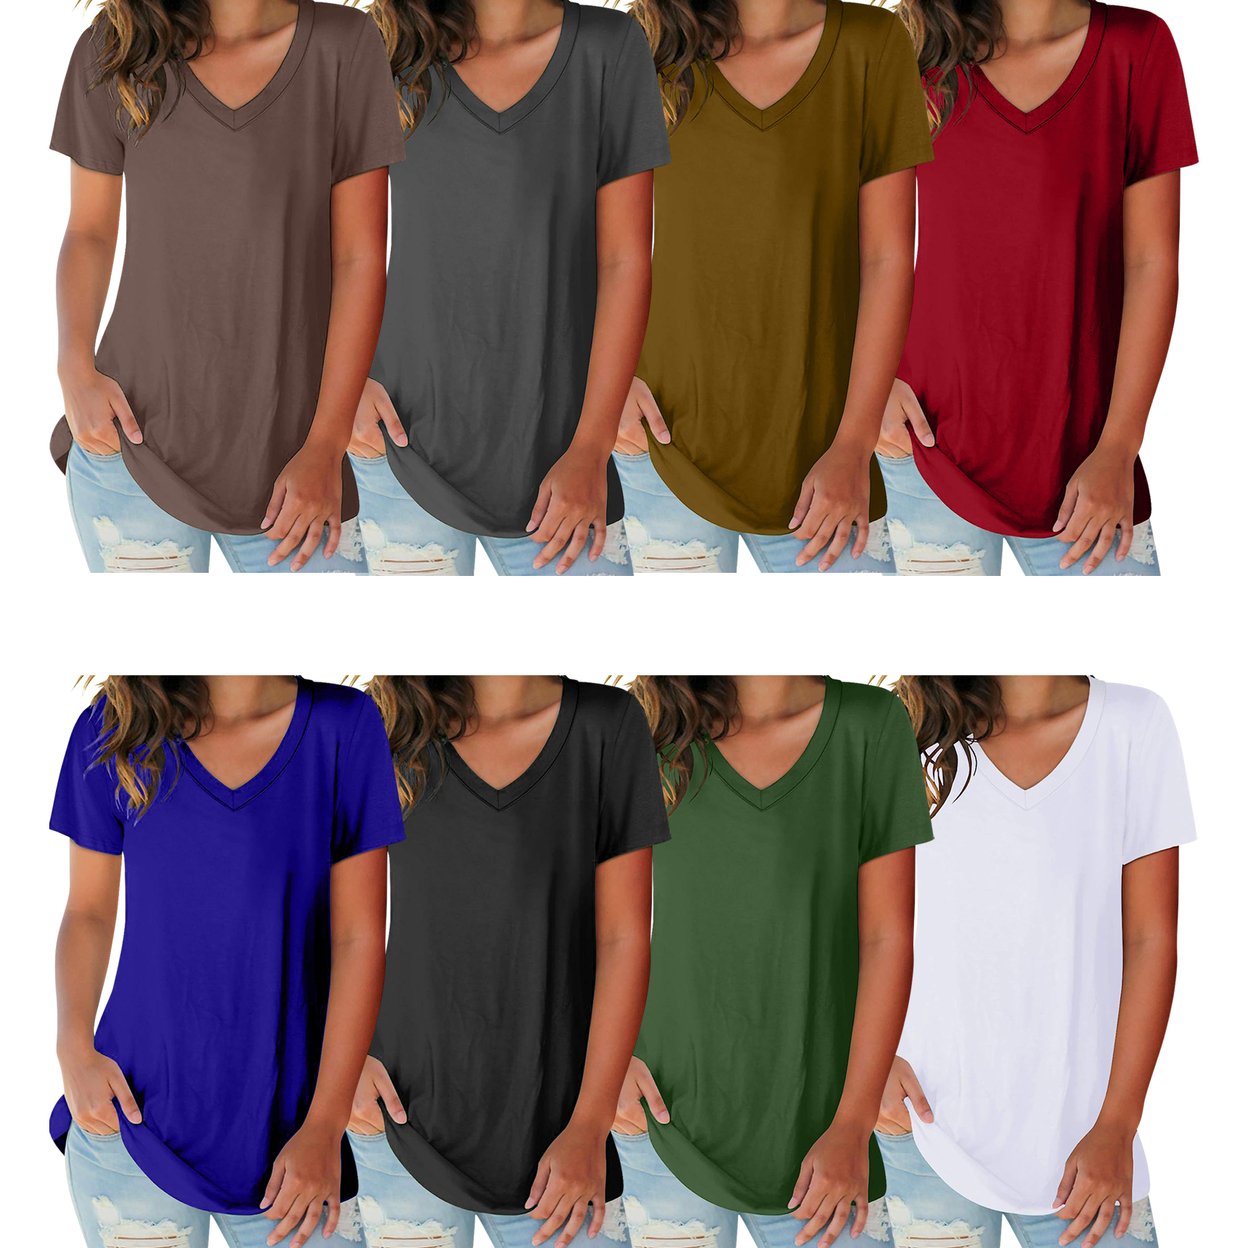 3-Pack: Women's Ultra Soft Smooth Cotton Blend Basic V-Neck Short Sleeve Shirts - Black, Grey, Brown, Small